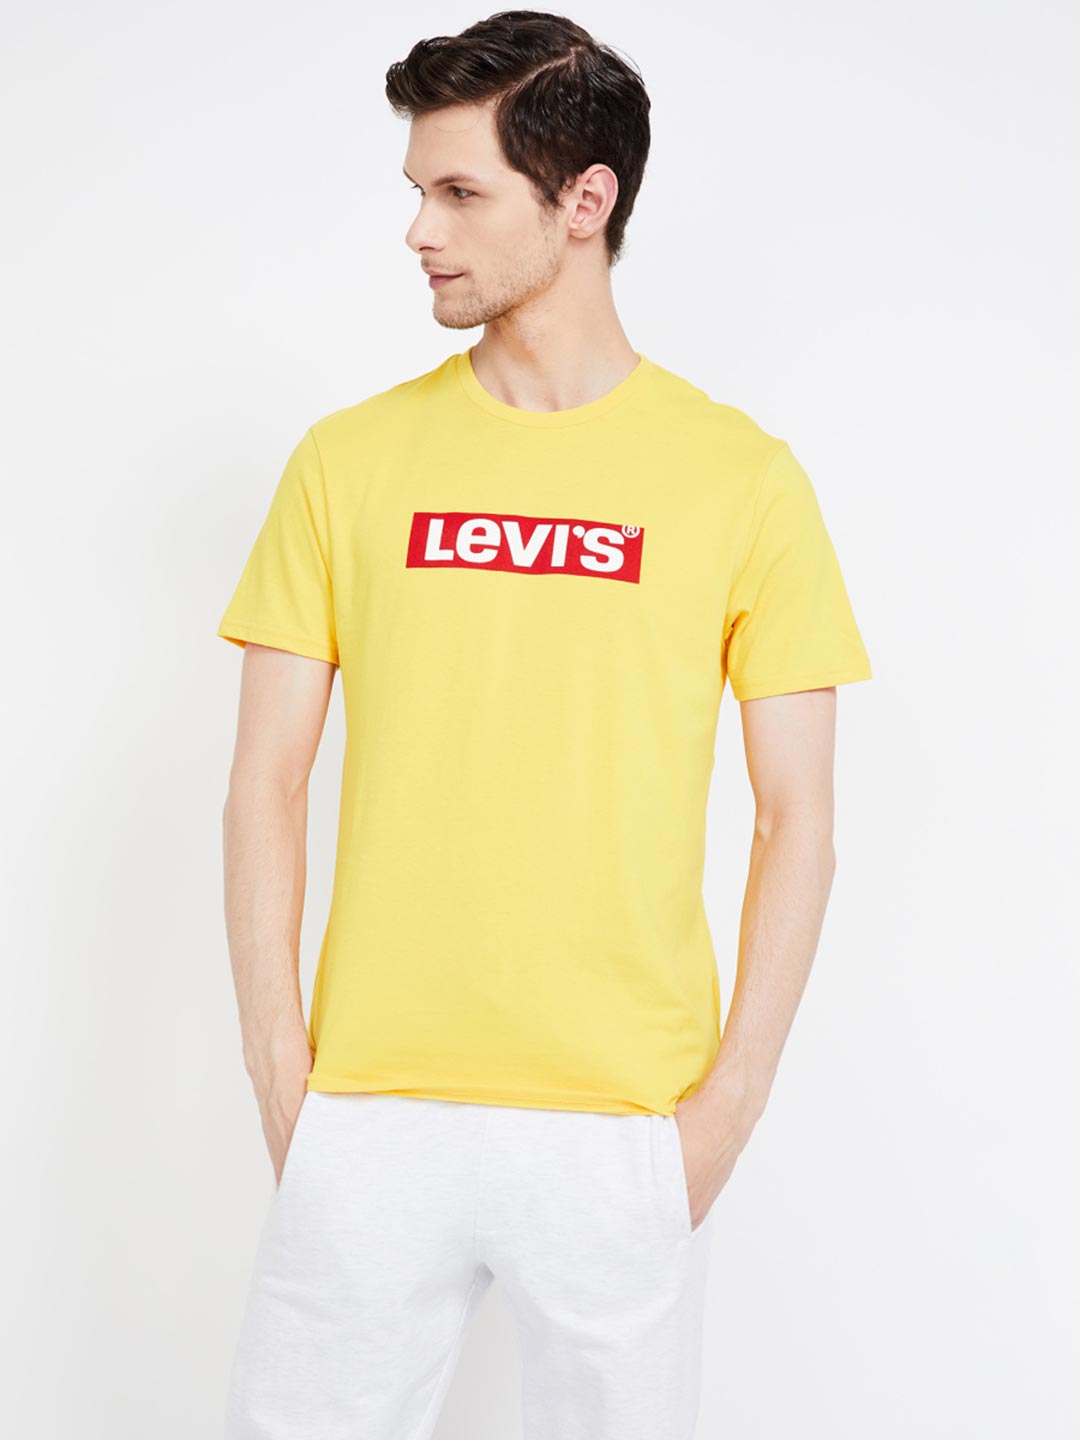 levis t shirt cost